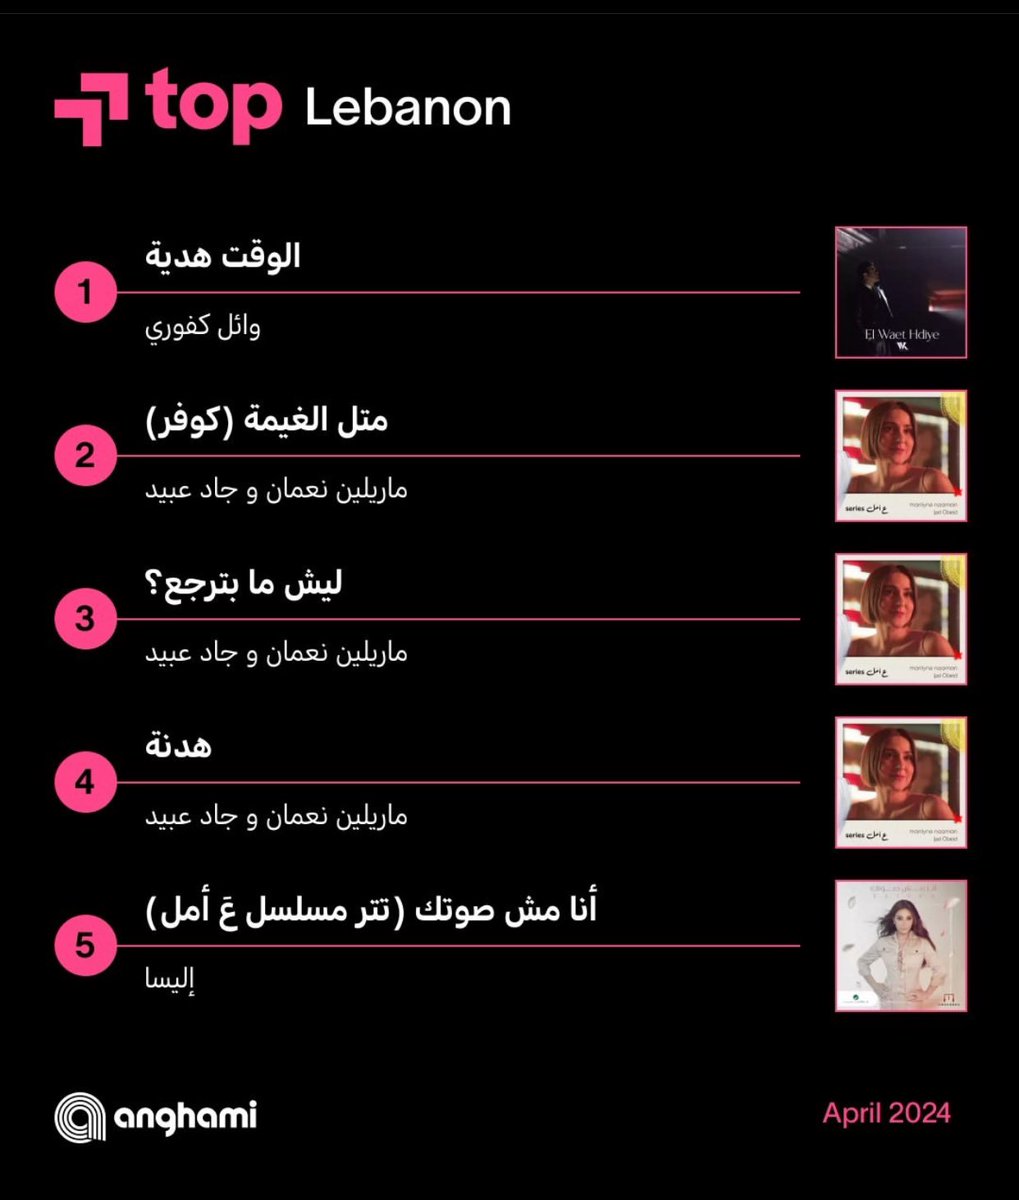 #انا_مش_صوتك 
Top #5 Lebanon 🇱🇧 on Anghami for April 2024 ❤️🎶

@elissakh 
@moyehiamusic